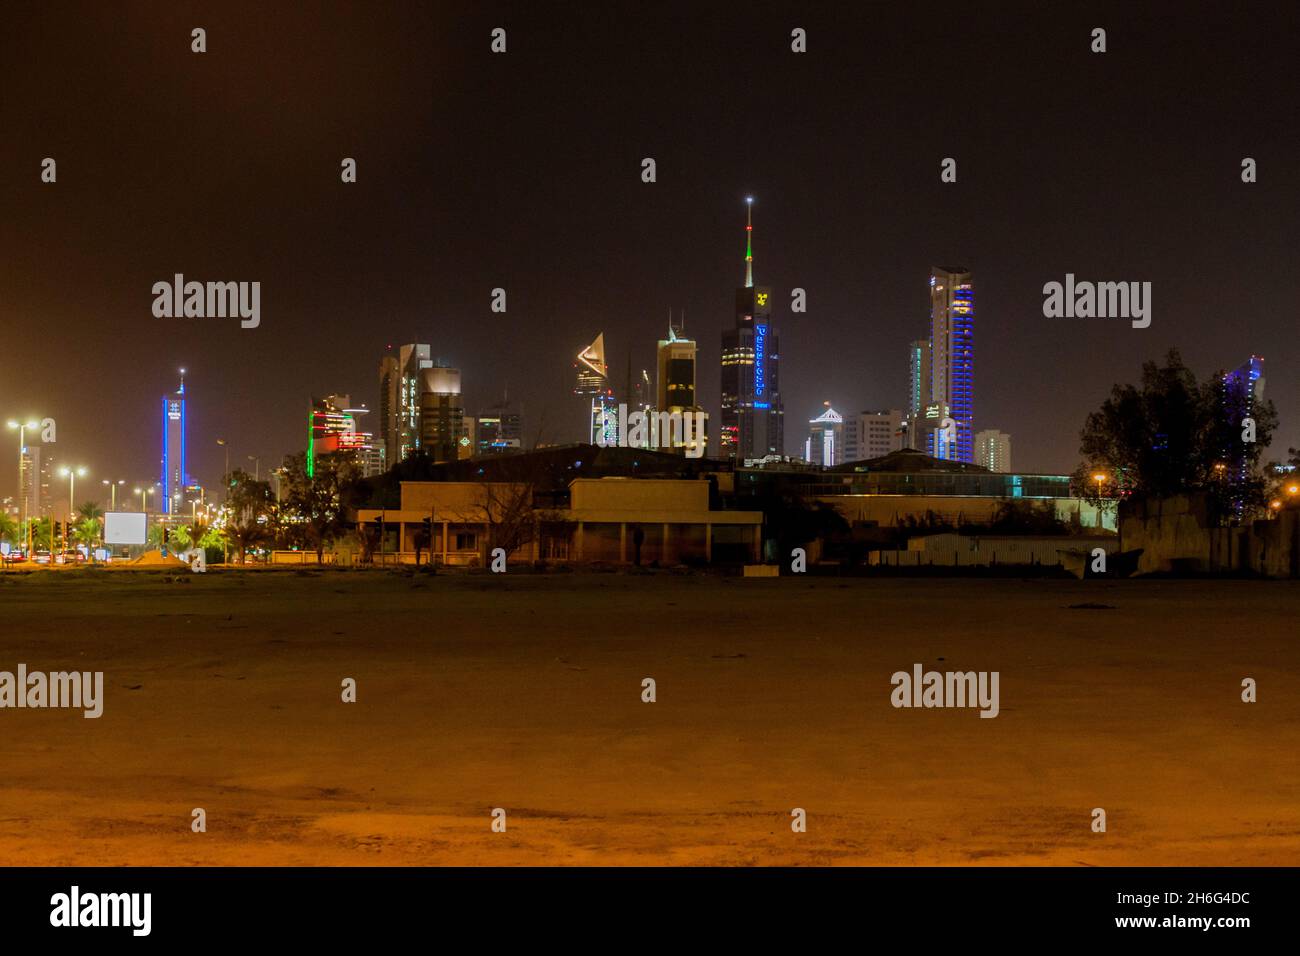 KUWAIT CITY, KUWAIT - MARCH 18, 2017: Night view of the Kuwait City skyline. Stock Photo